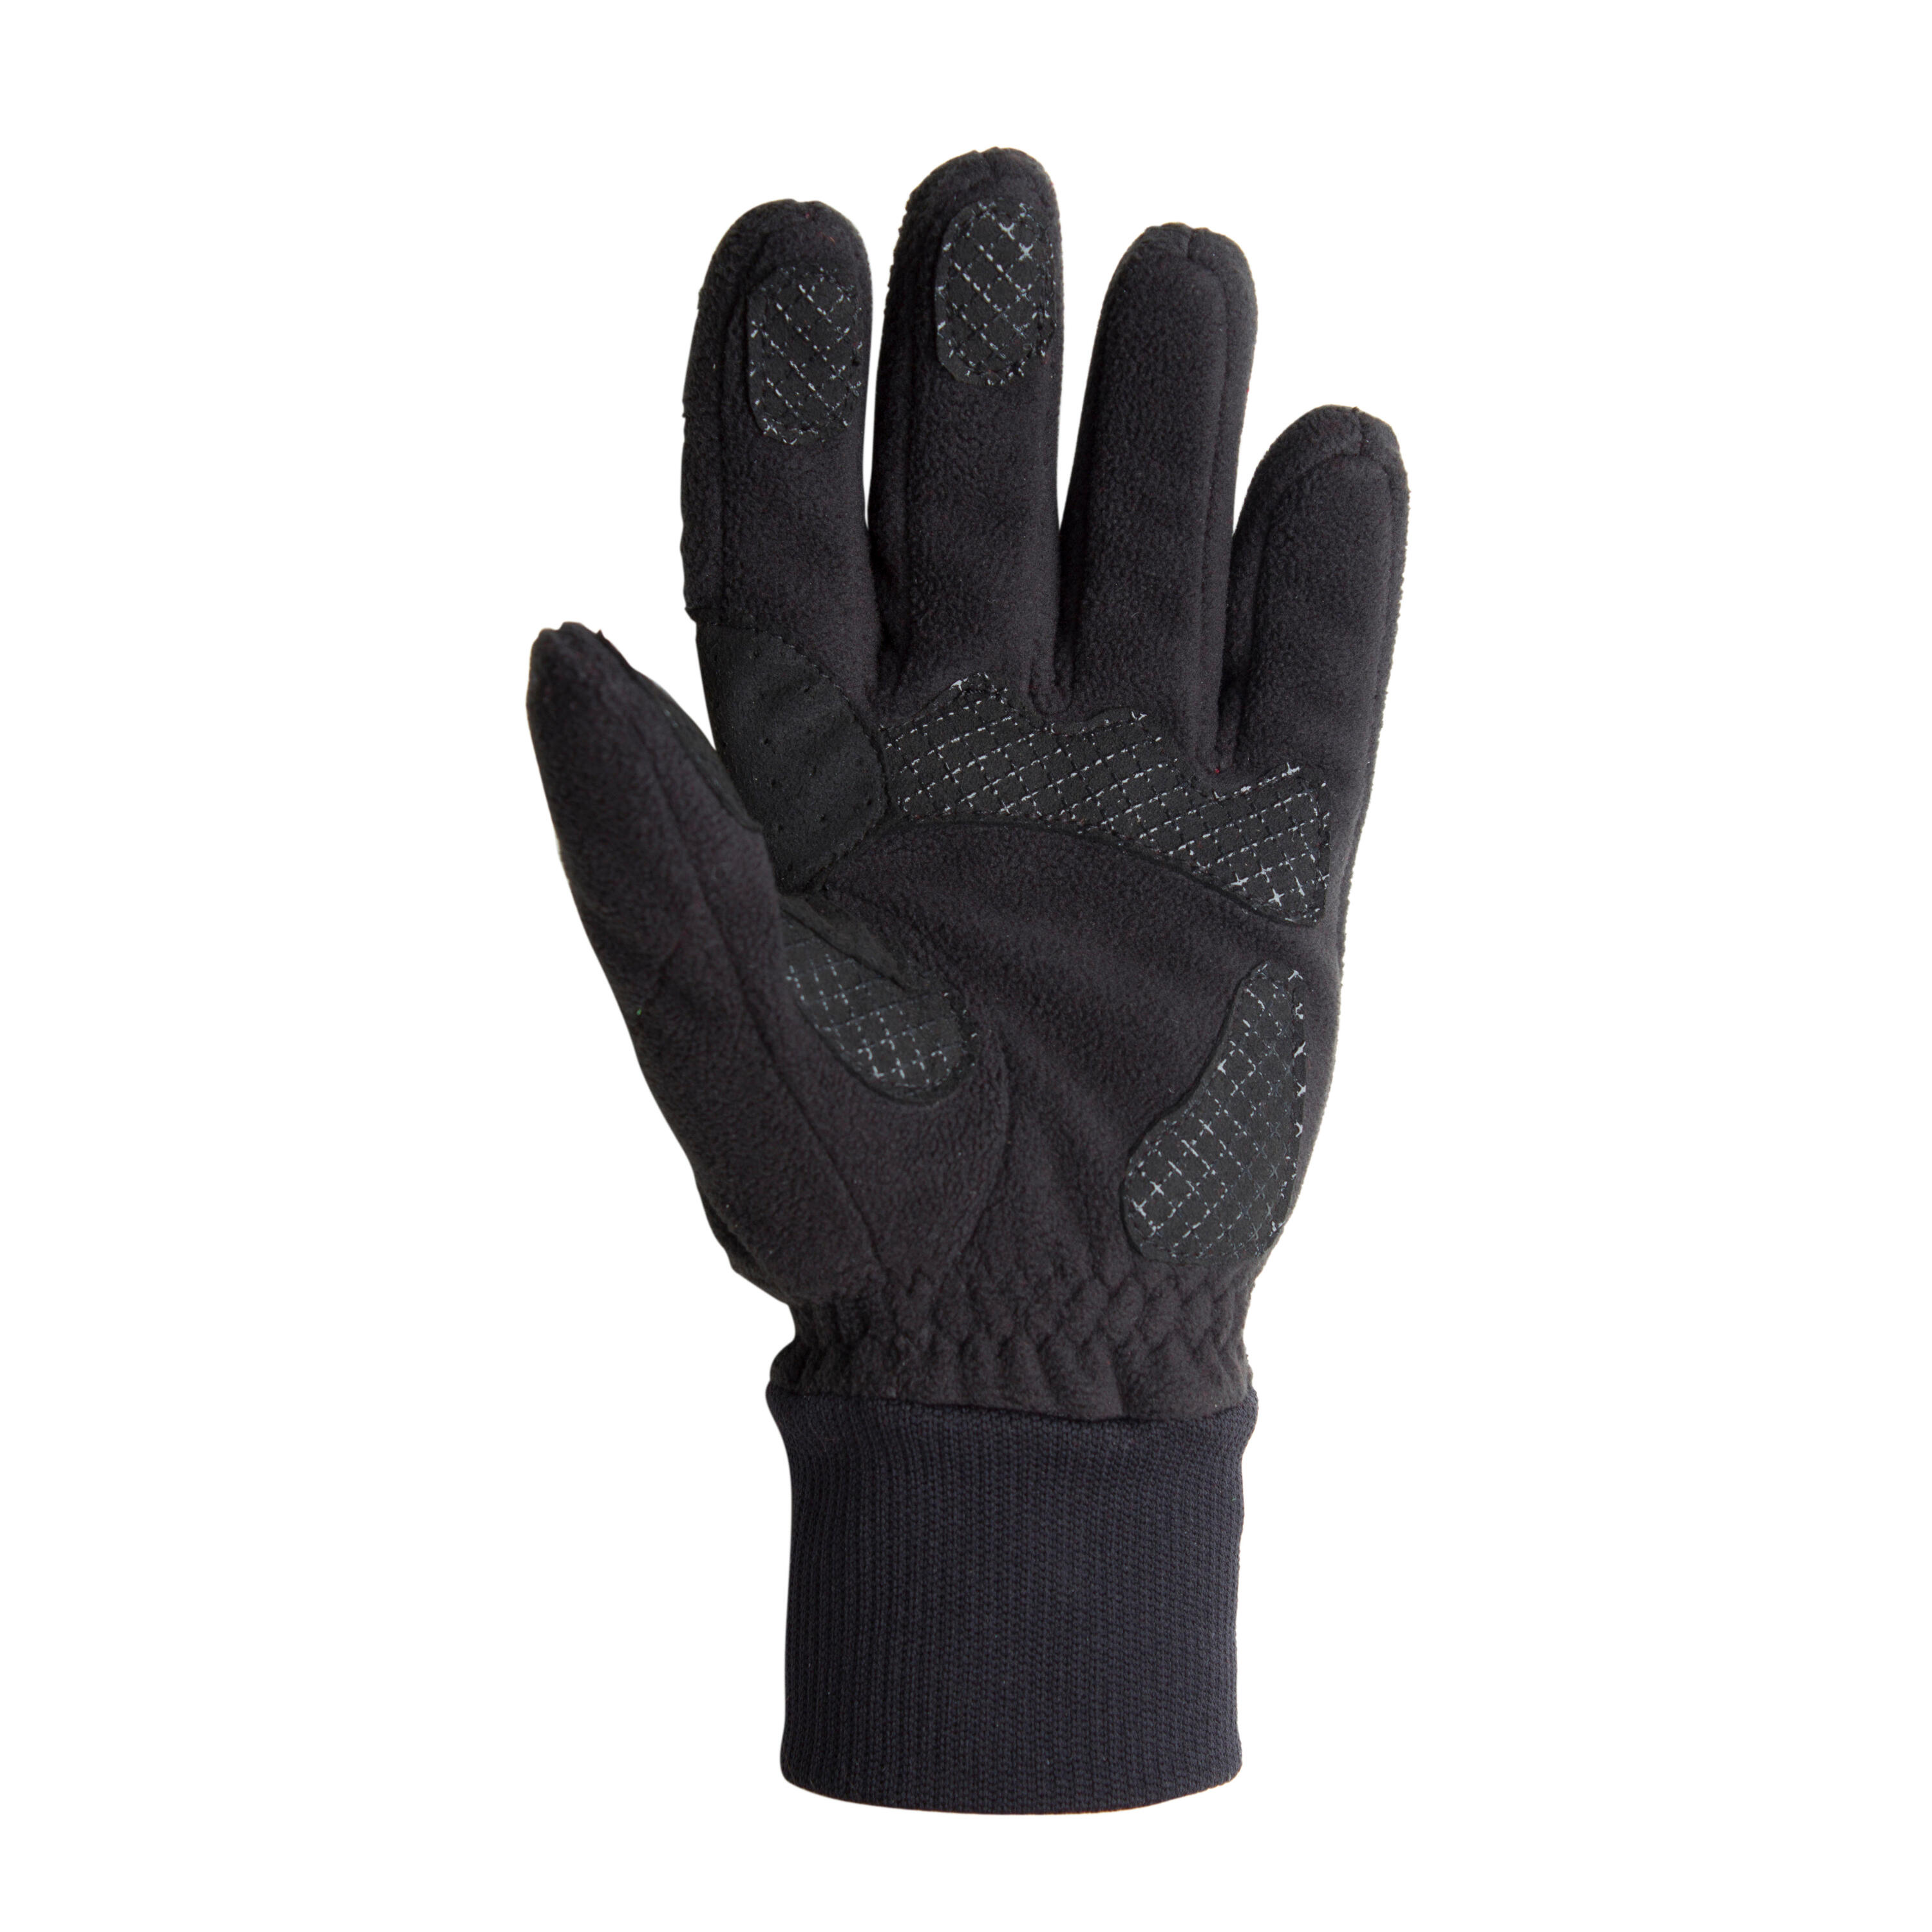 RC100 Winter Fleece Cycling Gloves - Black 3/8